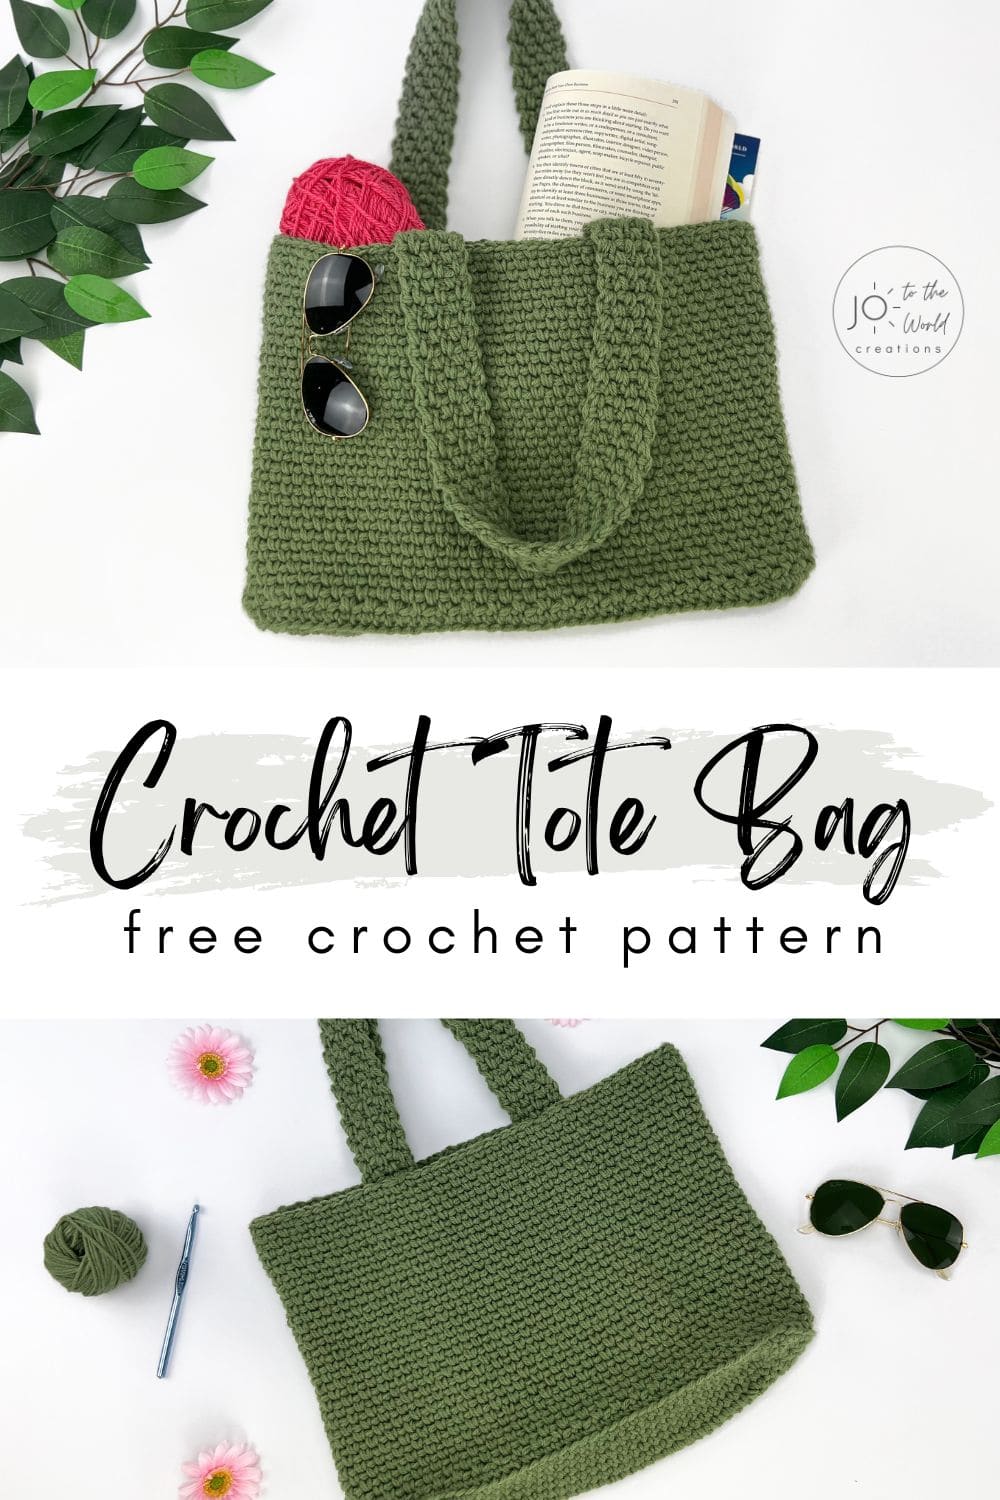 Crochet tote bag free pattern